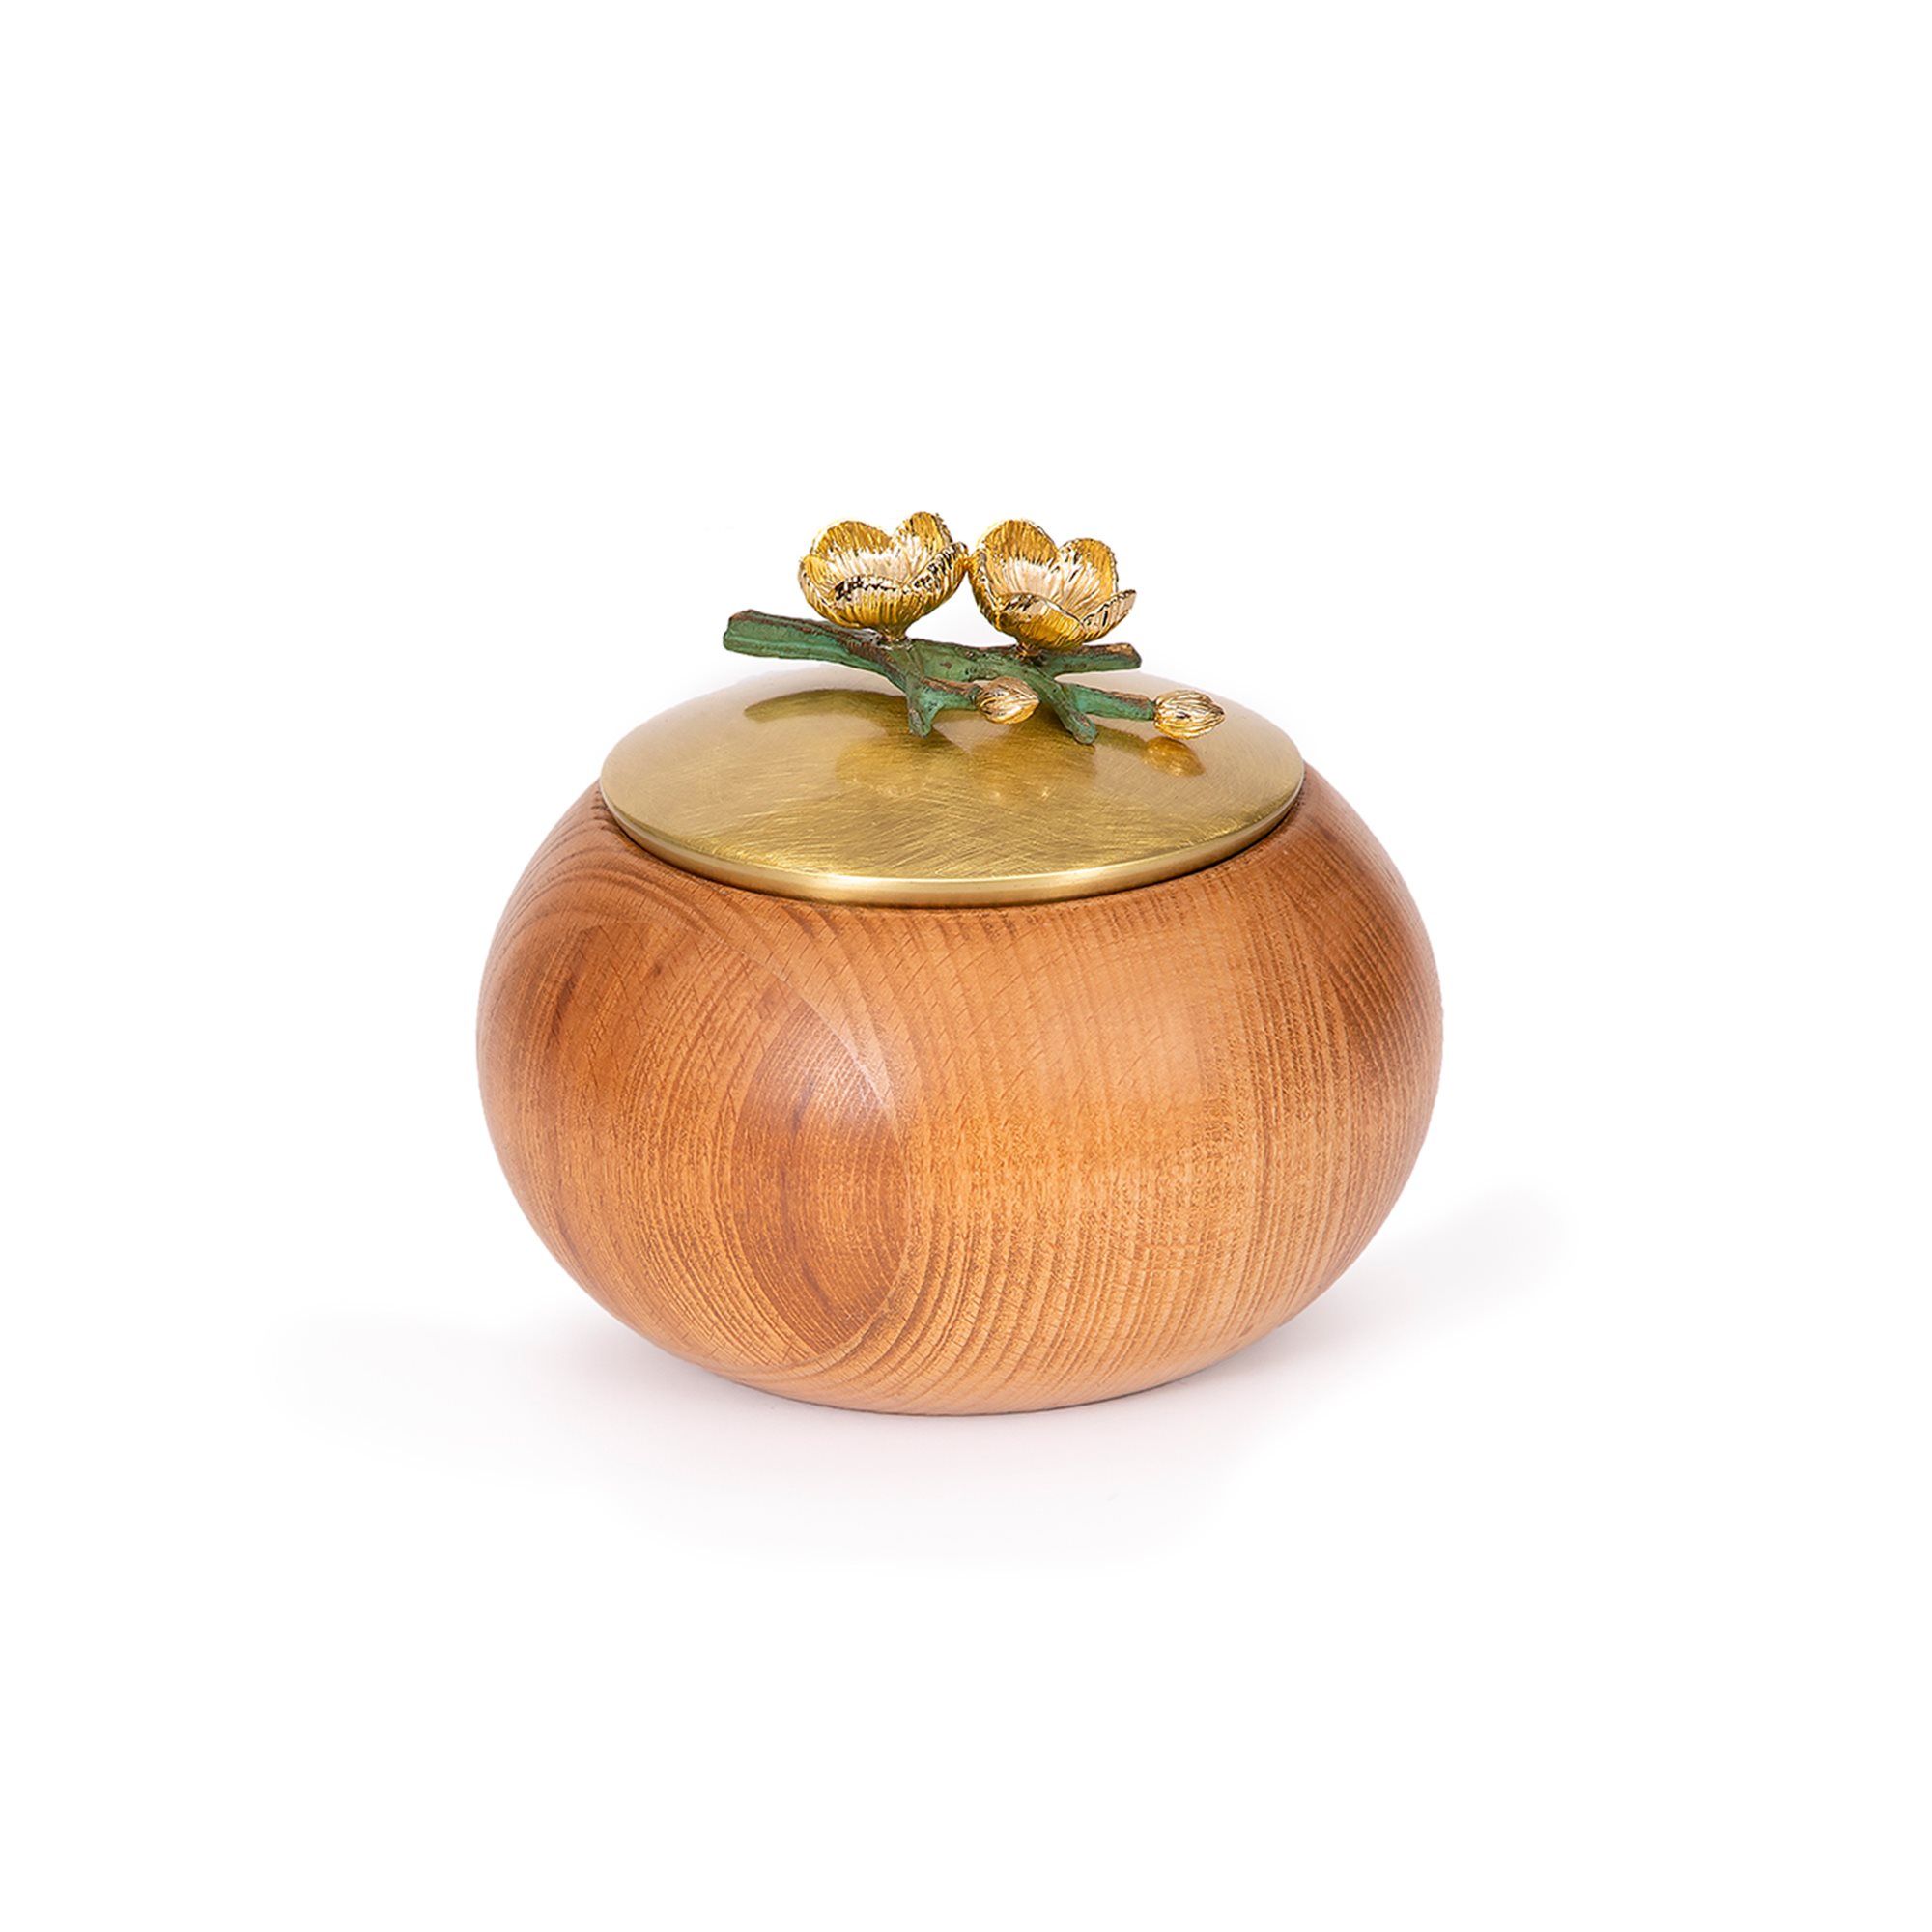 Marina Wood Bowl with Lid (Size C2)